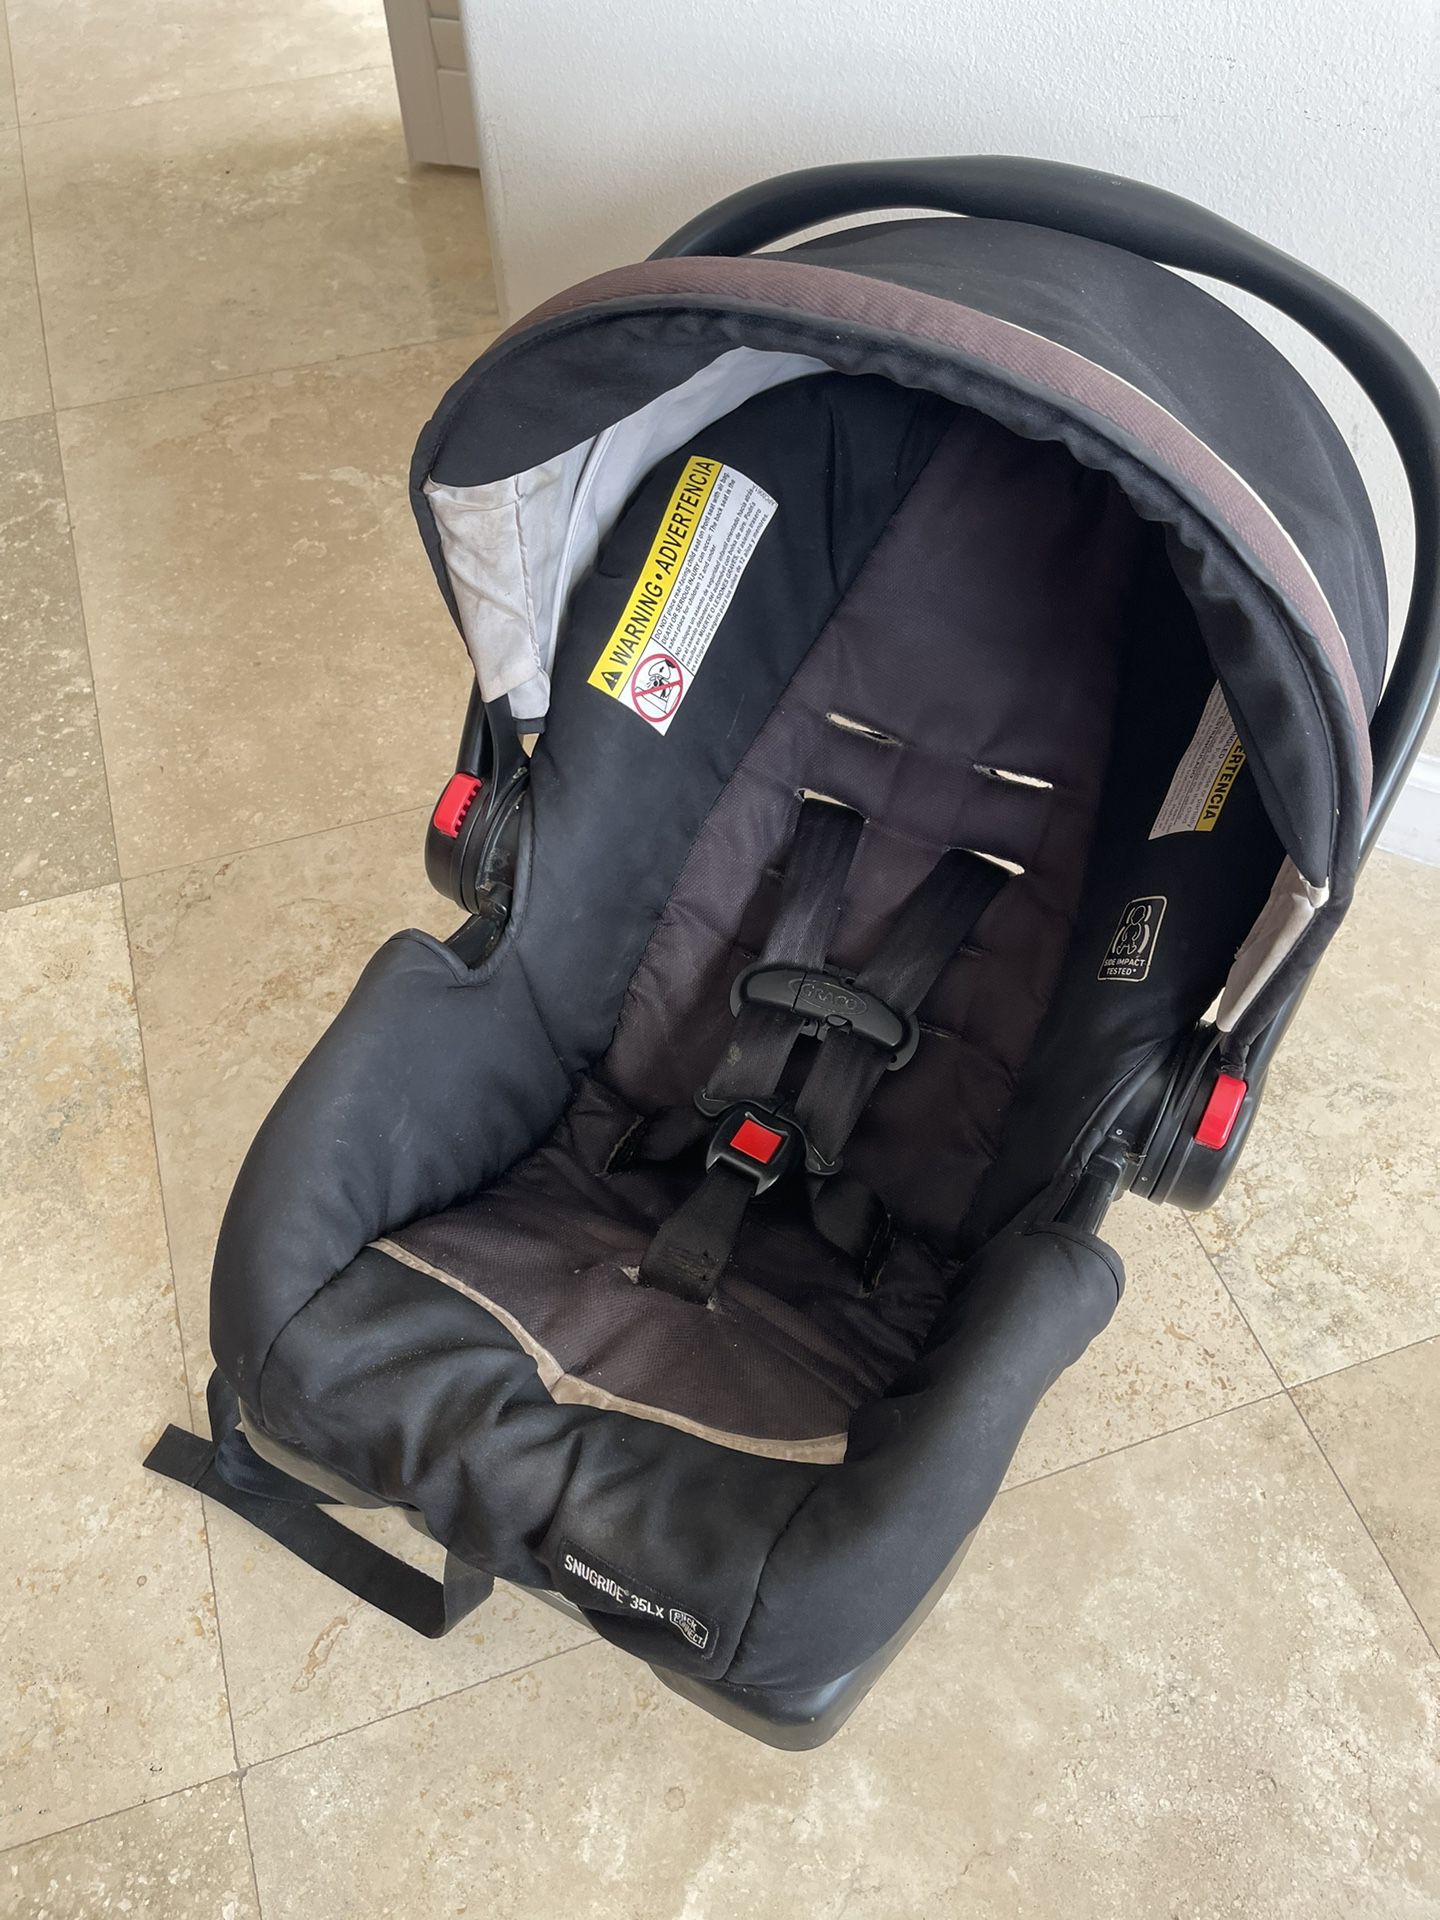 Graco Infant Car Seat - LIKE NEW 